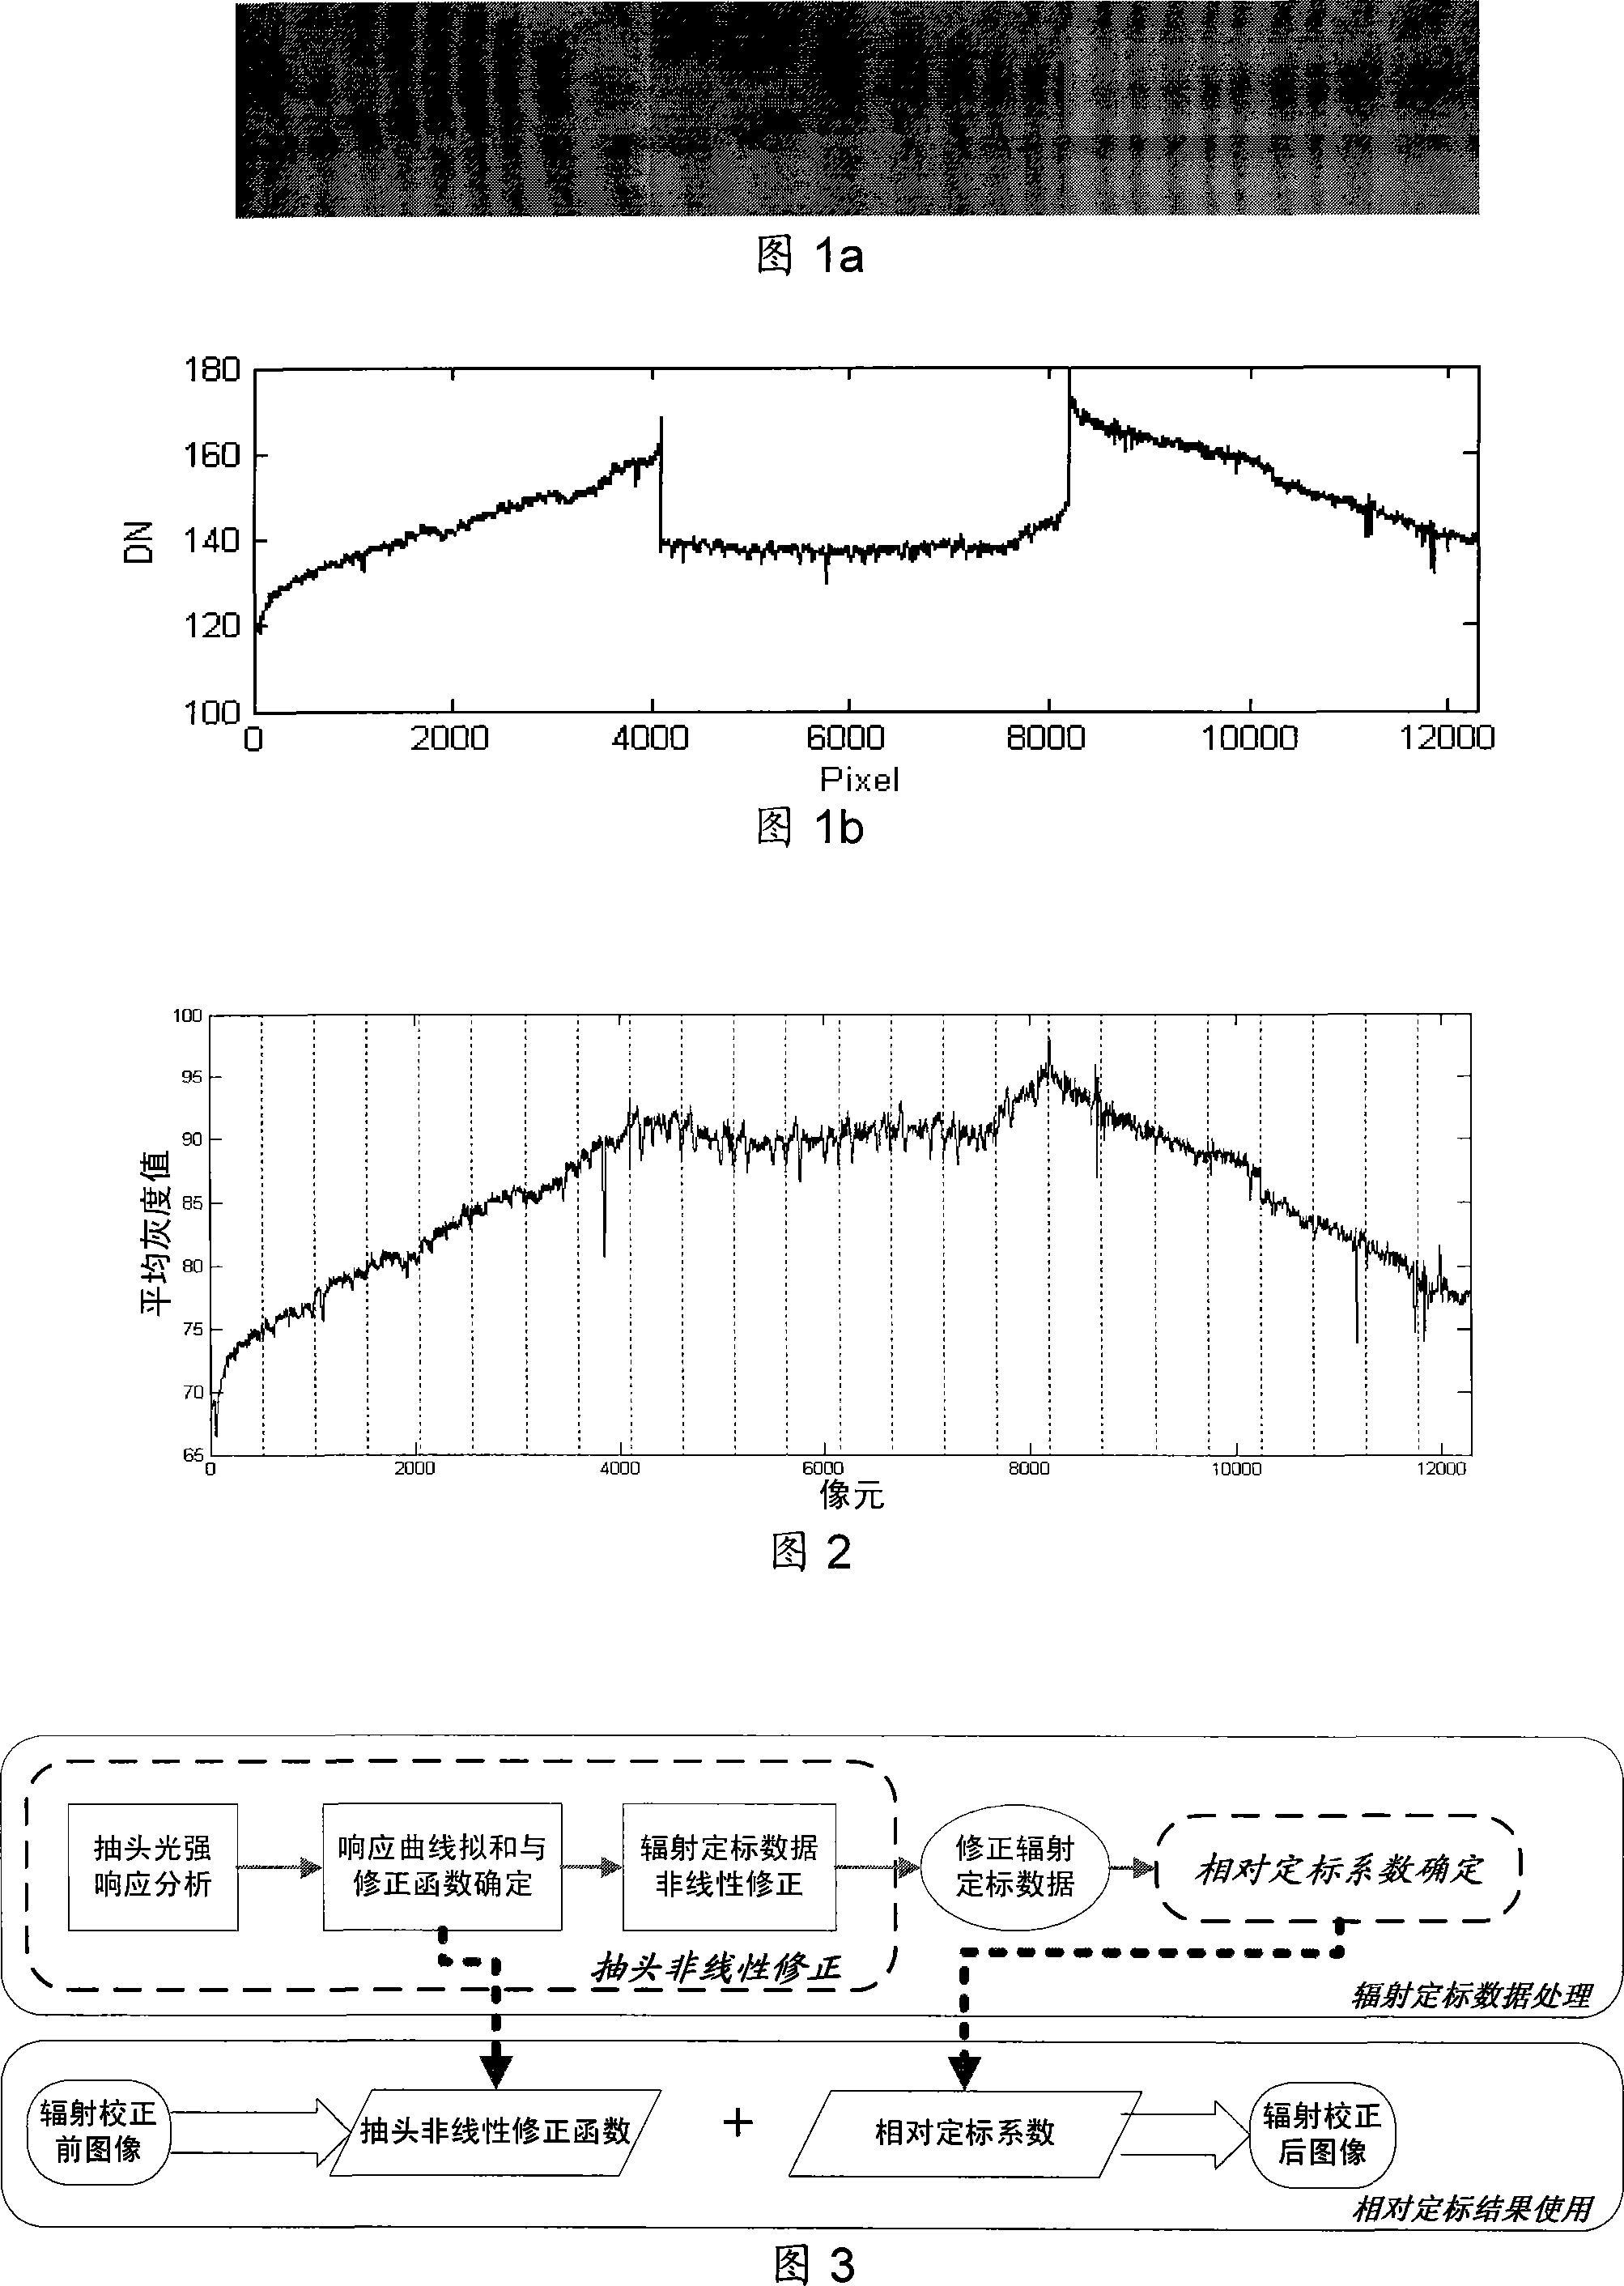 Relative radiometric correction method for star-load TDICCD camera